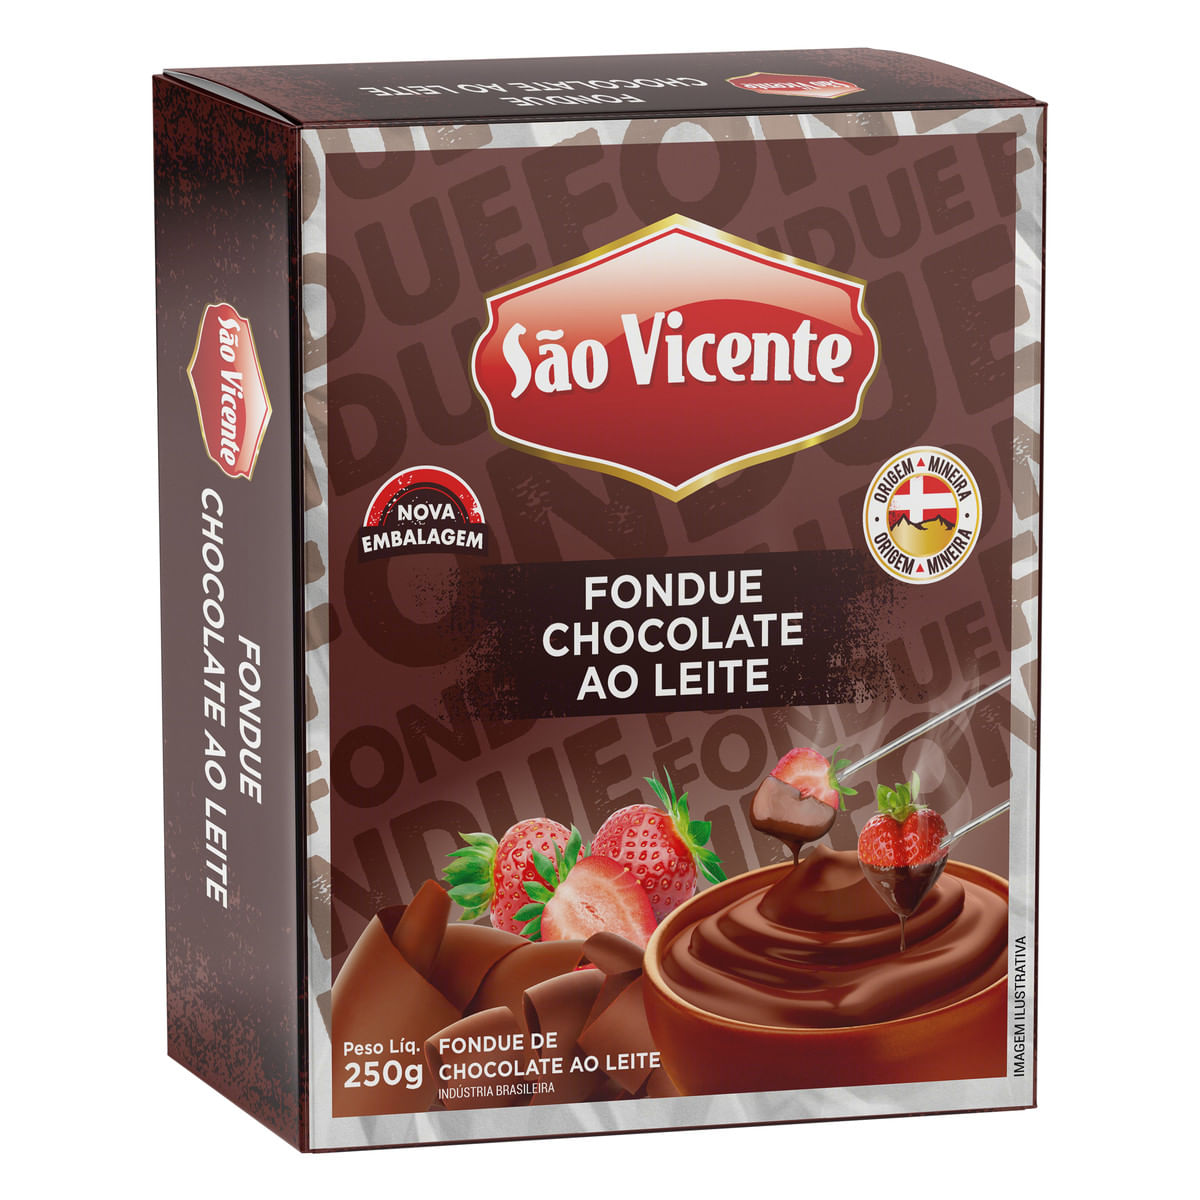 SORVETINHO FRUTALIA CHOCOLATE 55G